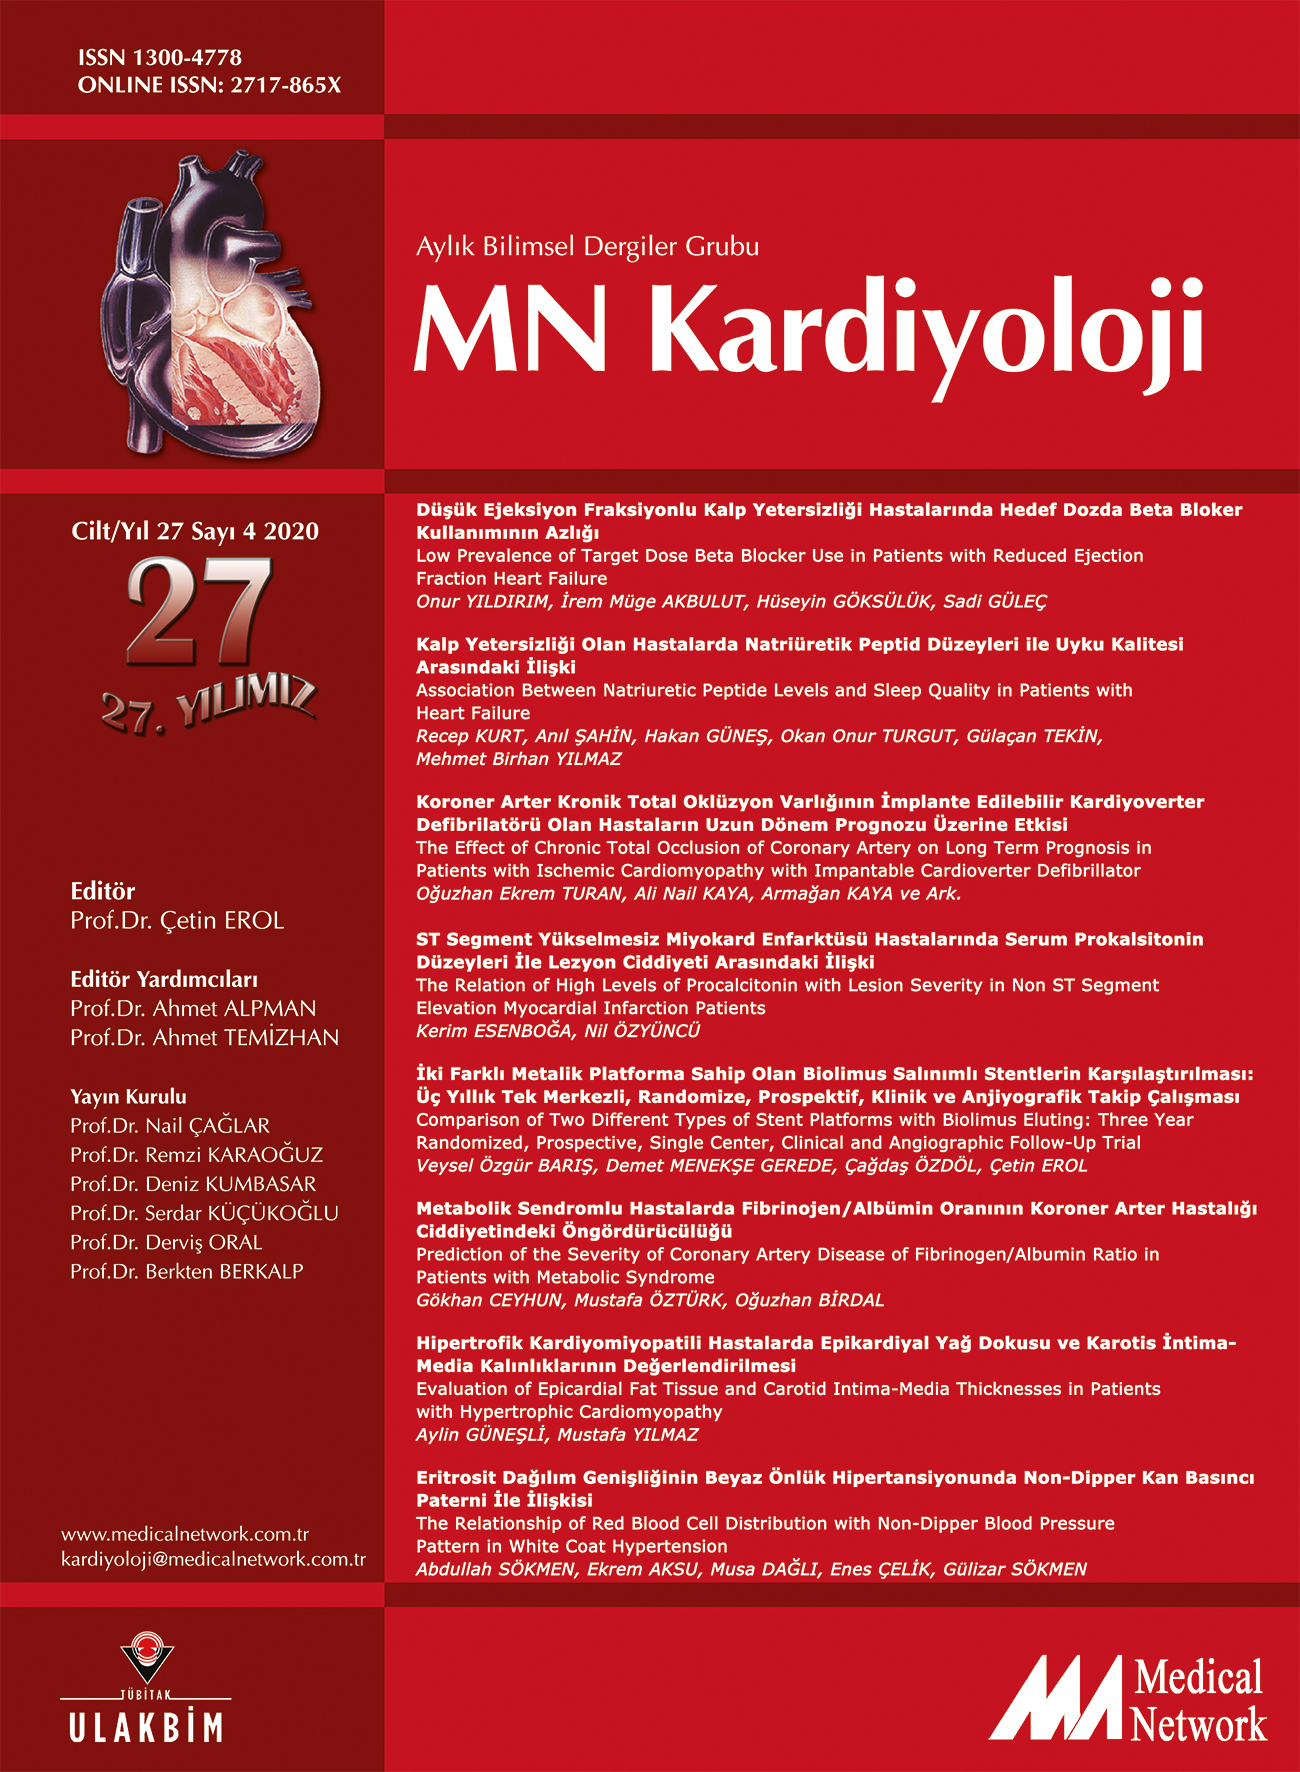 <p>MN Kardiyoloji Cilt: 27 Sayı: 4 2020 MN Cardiology Volume: 27 No: 4 2020</p>